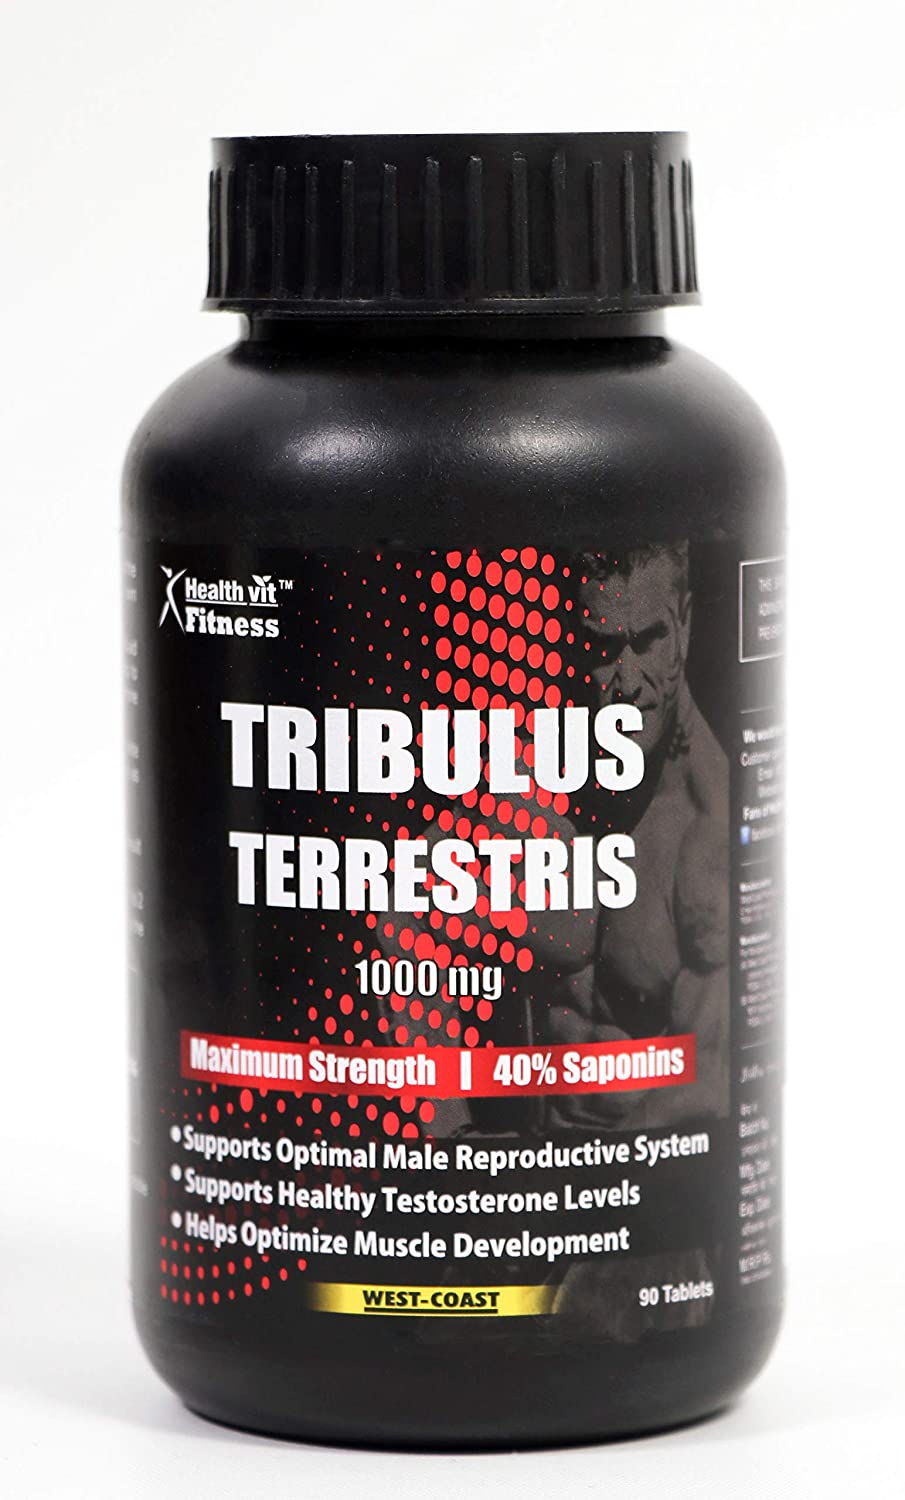 Healthvit Fitness Tribulus Terrestris Image